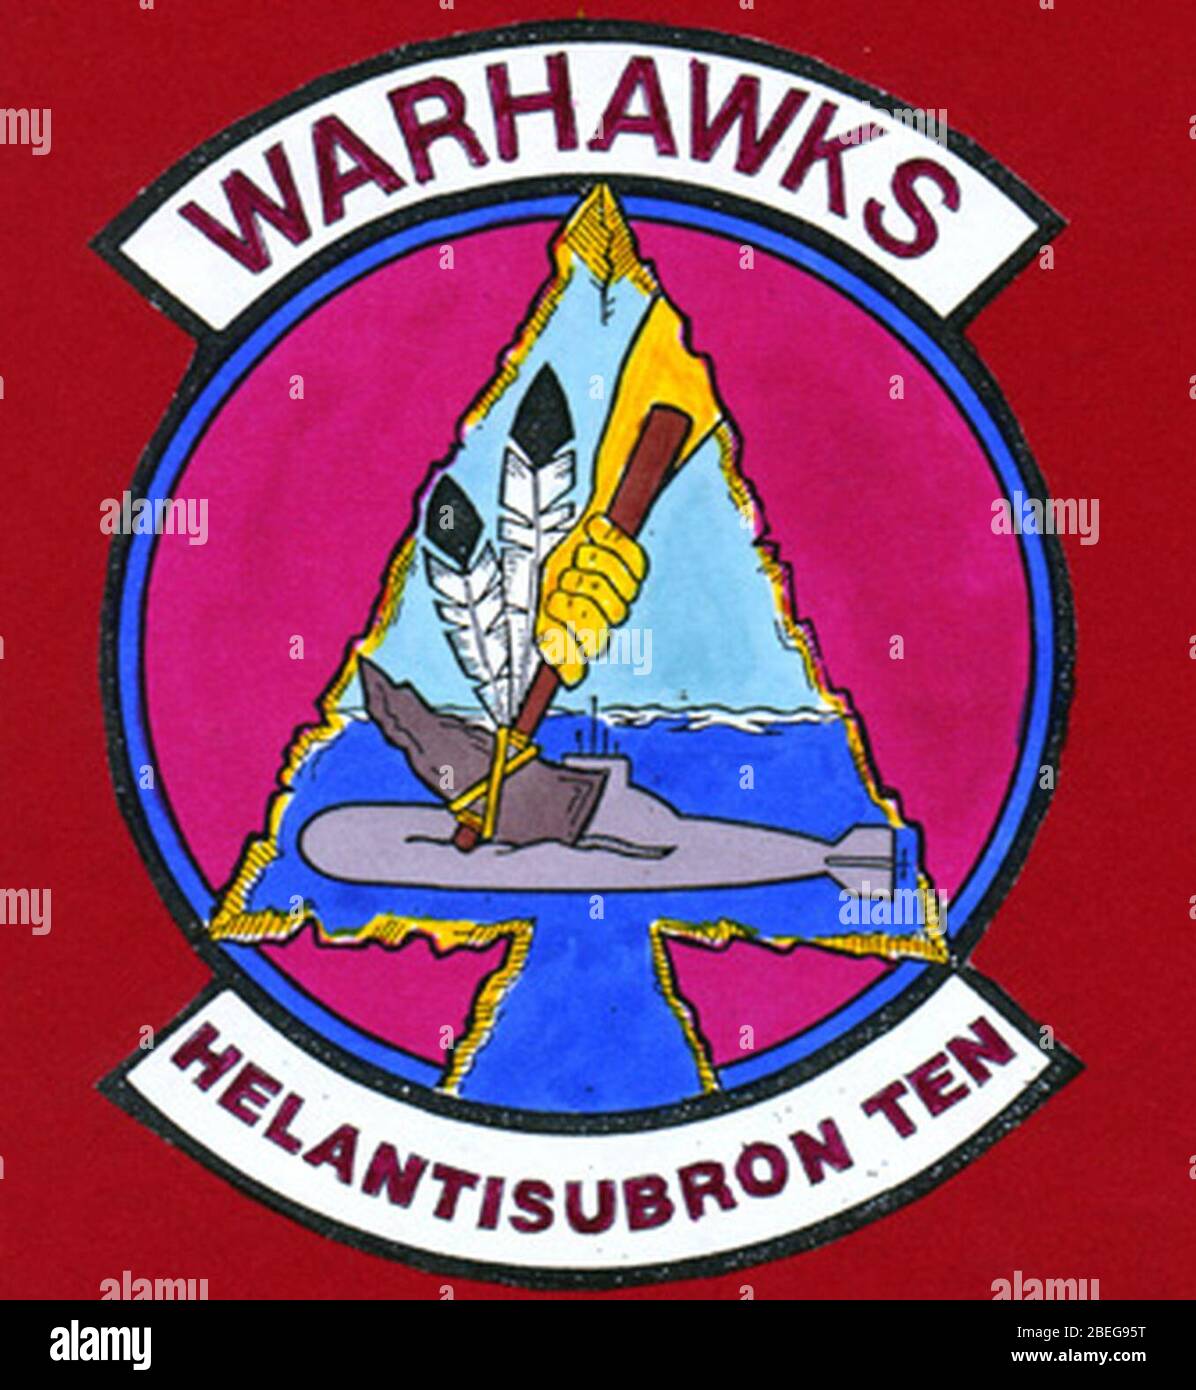 Helicopter Anti-Submarine Squadron 10 (United States Navy - insignia). Stock Photo